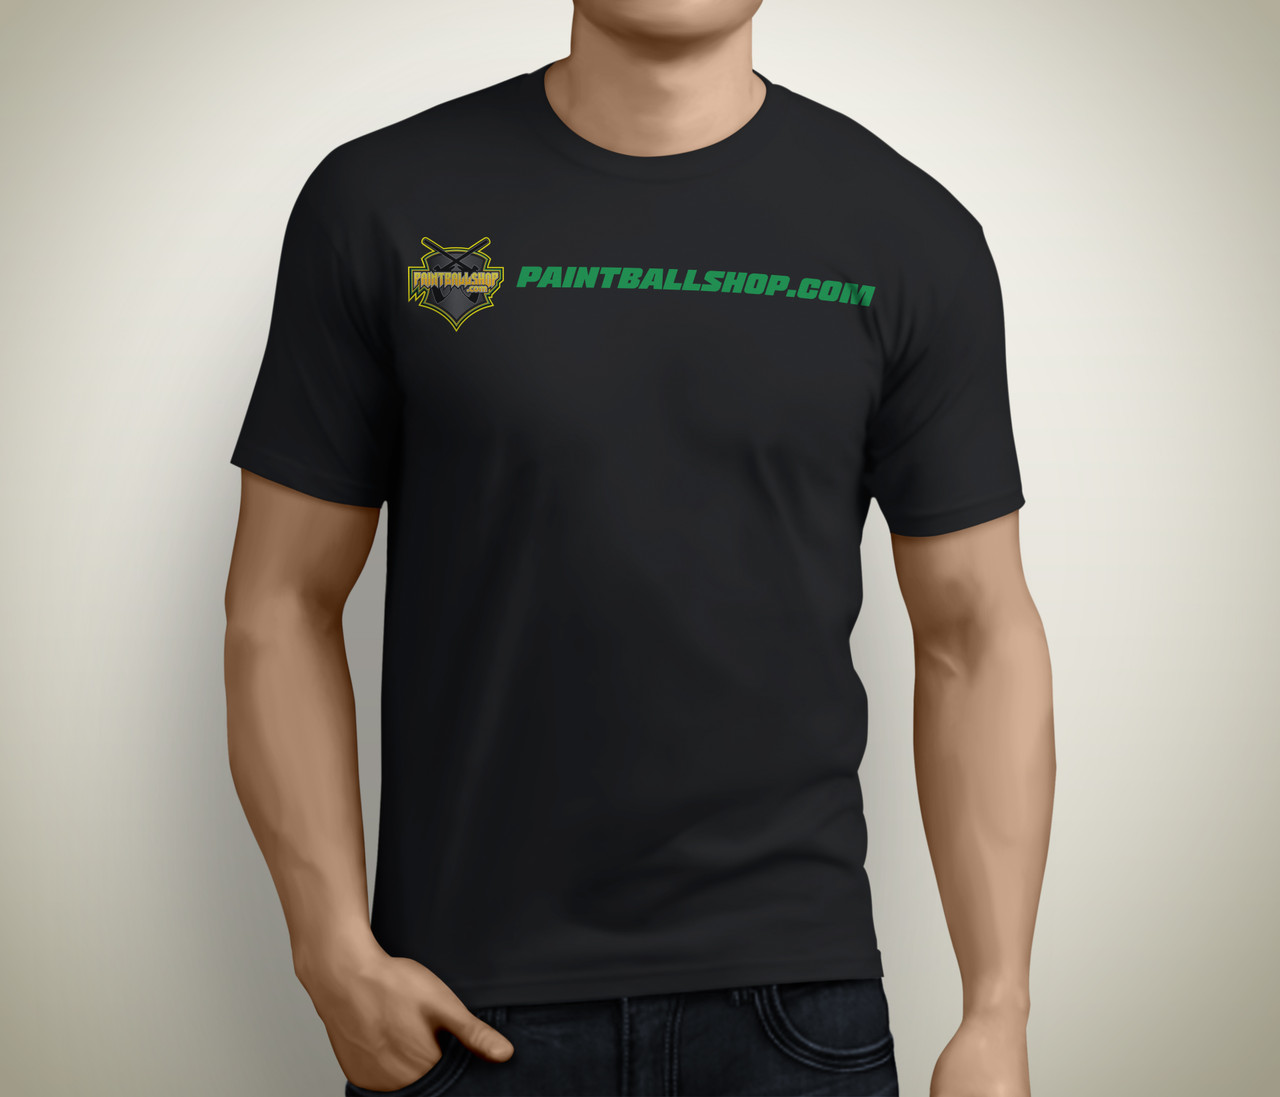 Paintballshop.com 2021 - Sponsored Tshirt